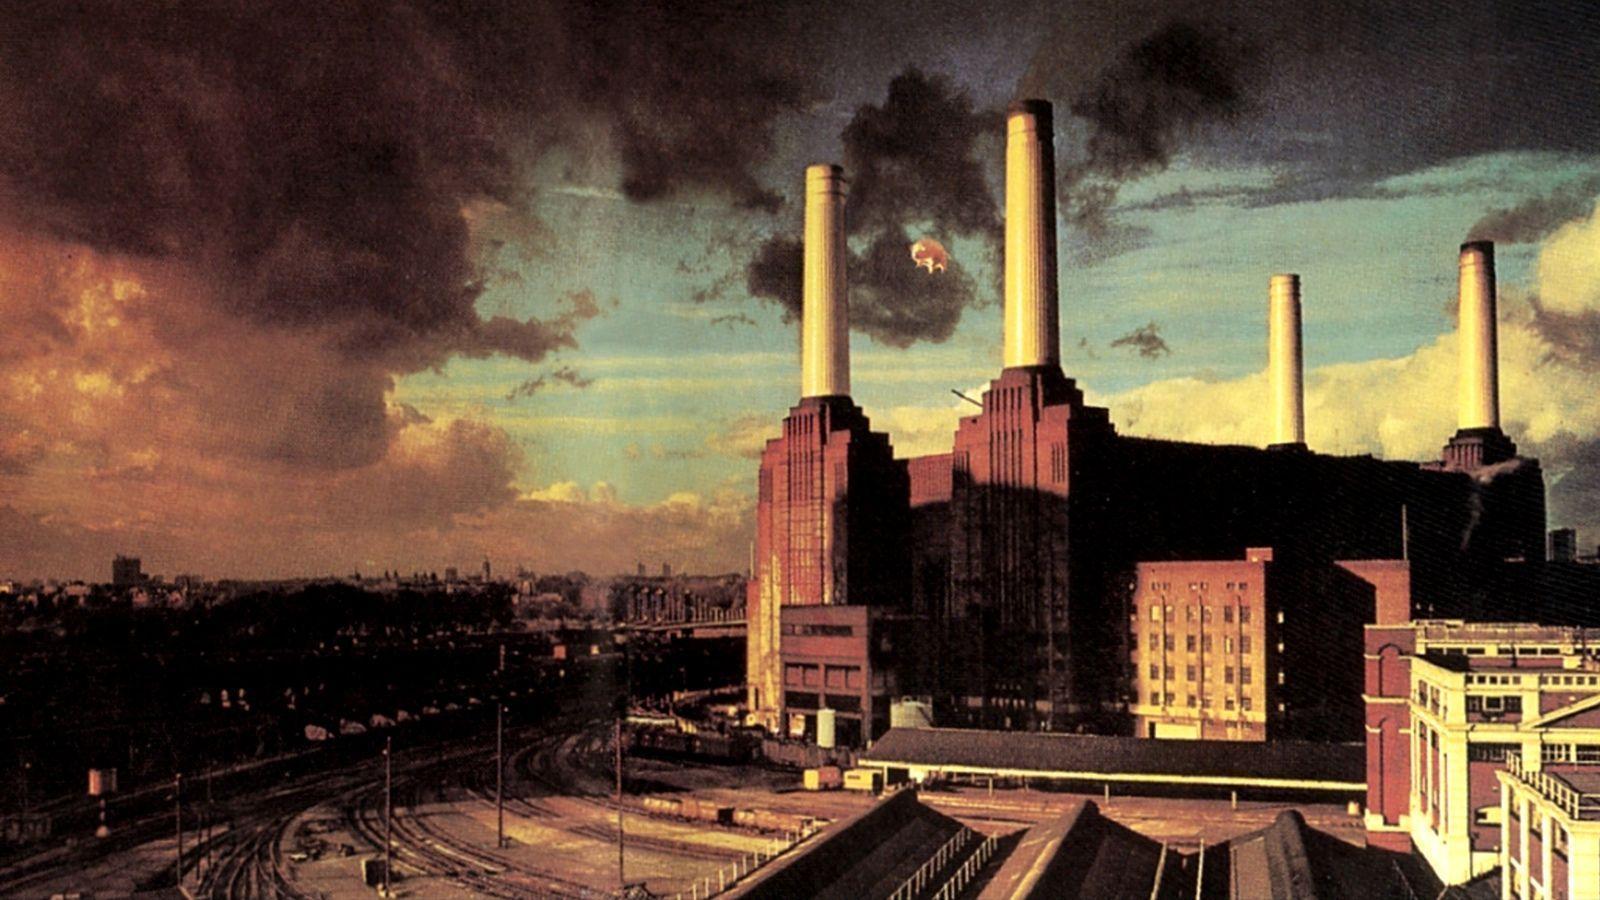 Pink Floyd Background